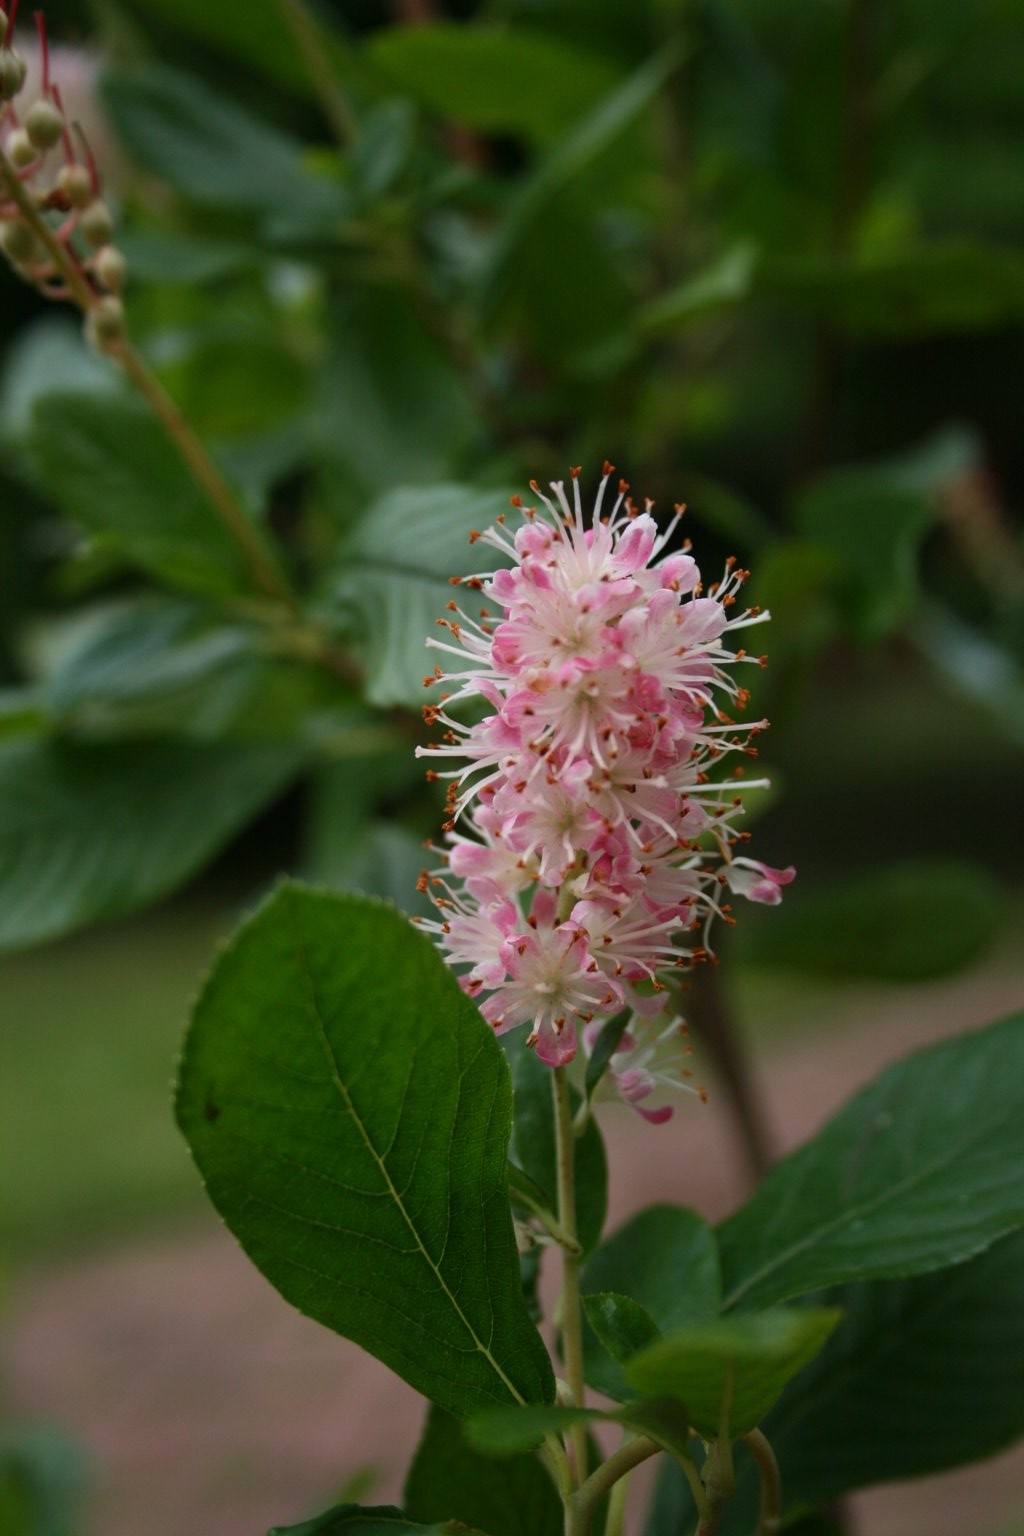 Orszelina olcholistna "Pink Spire" / Clethra alnifolia "Pink Spire"